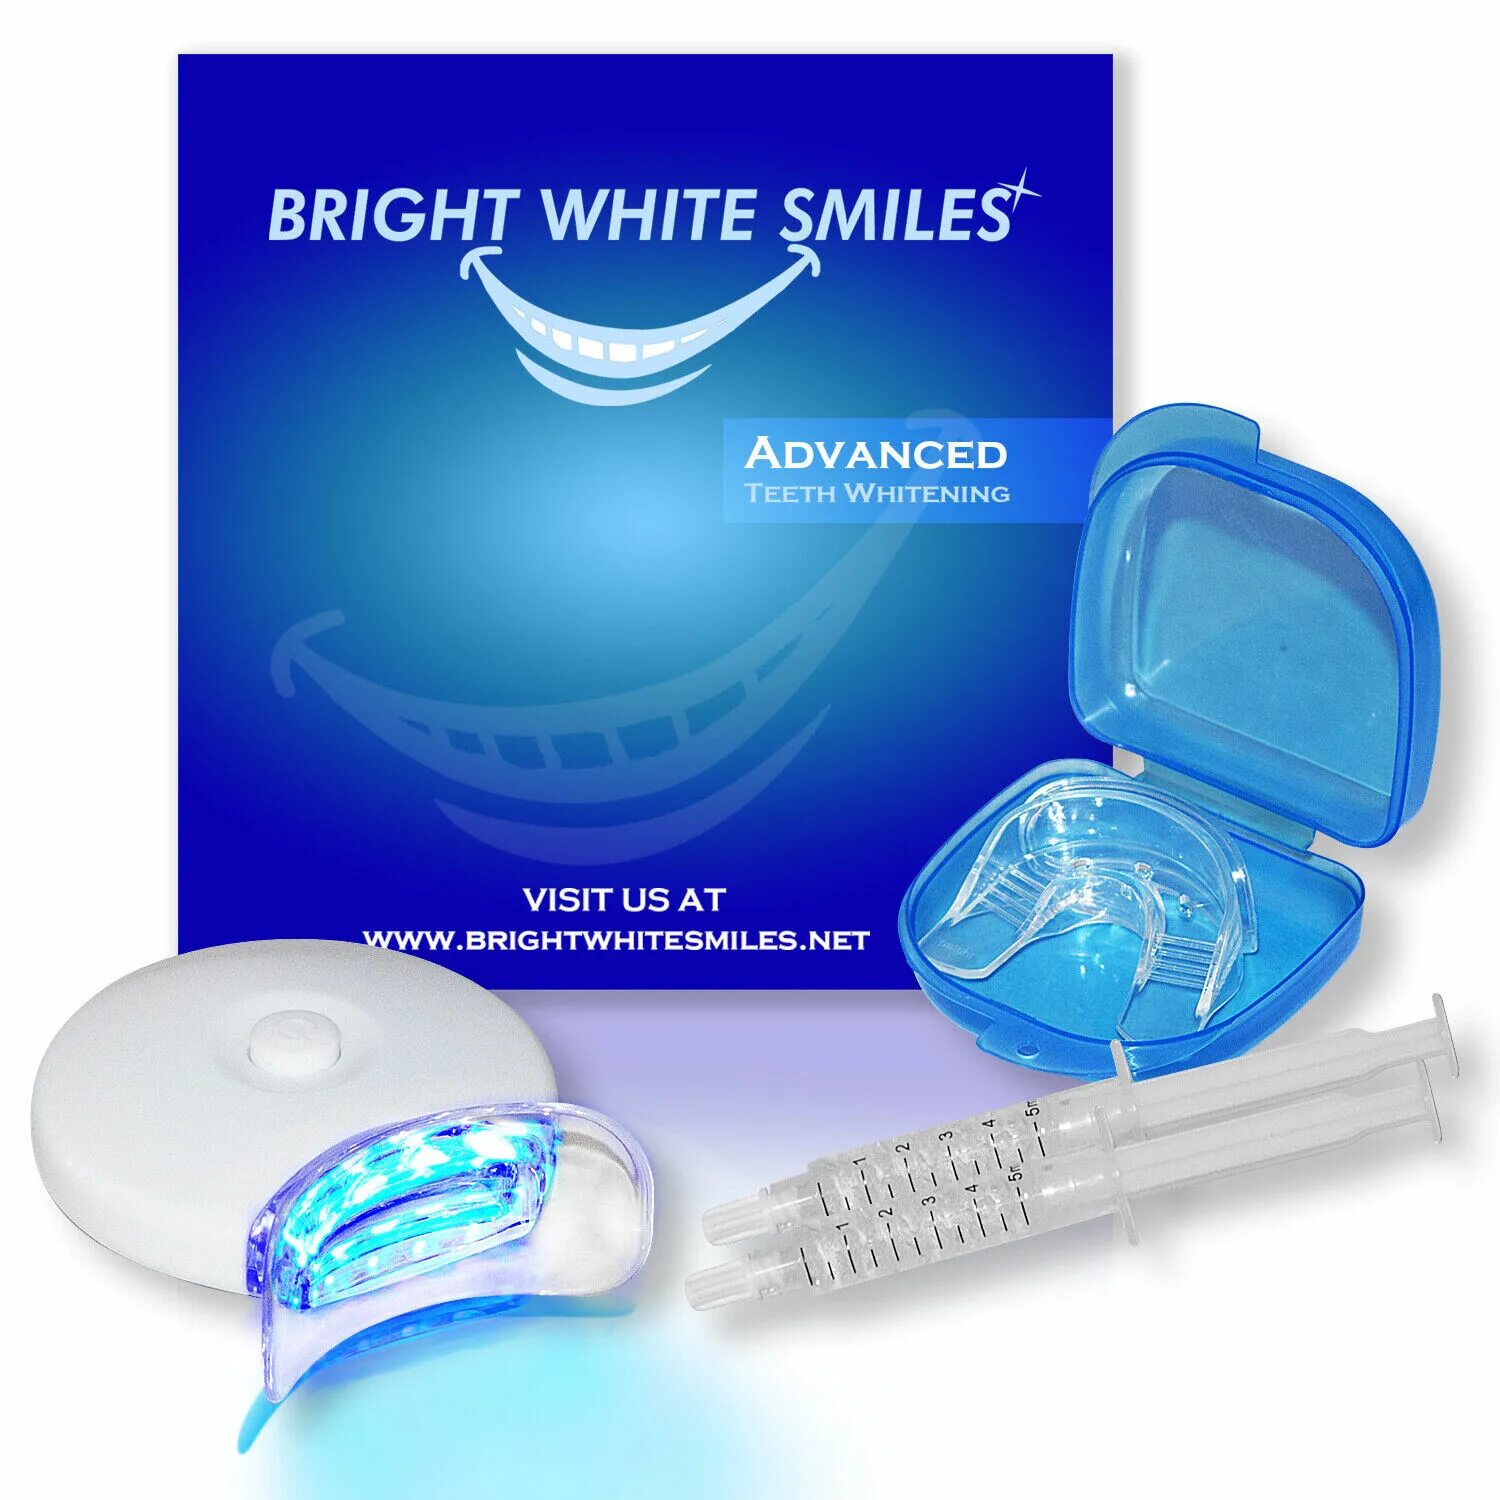 Средство для отбеливания зубов. Отбеливание зубов препараты. Набор для отбеливания зубов White Light. Brite smile отбеливание.